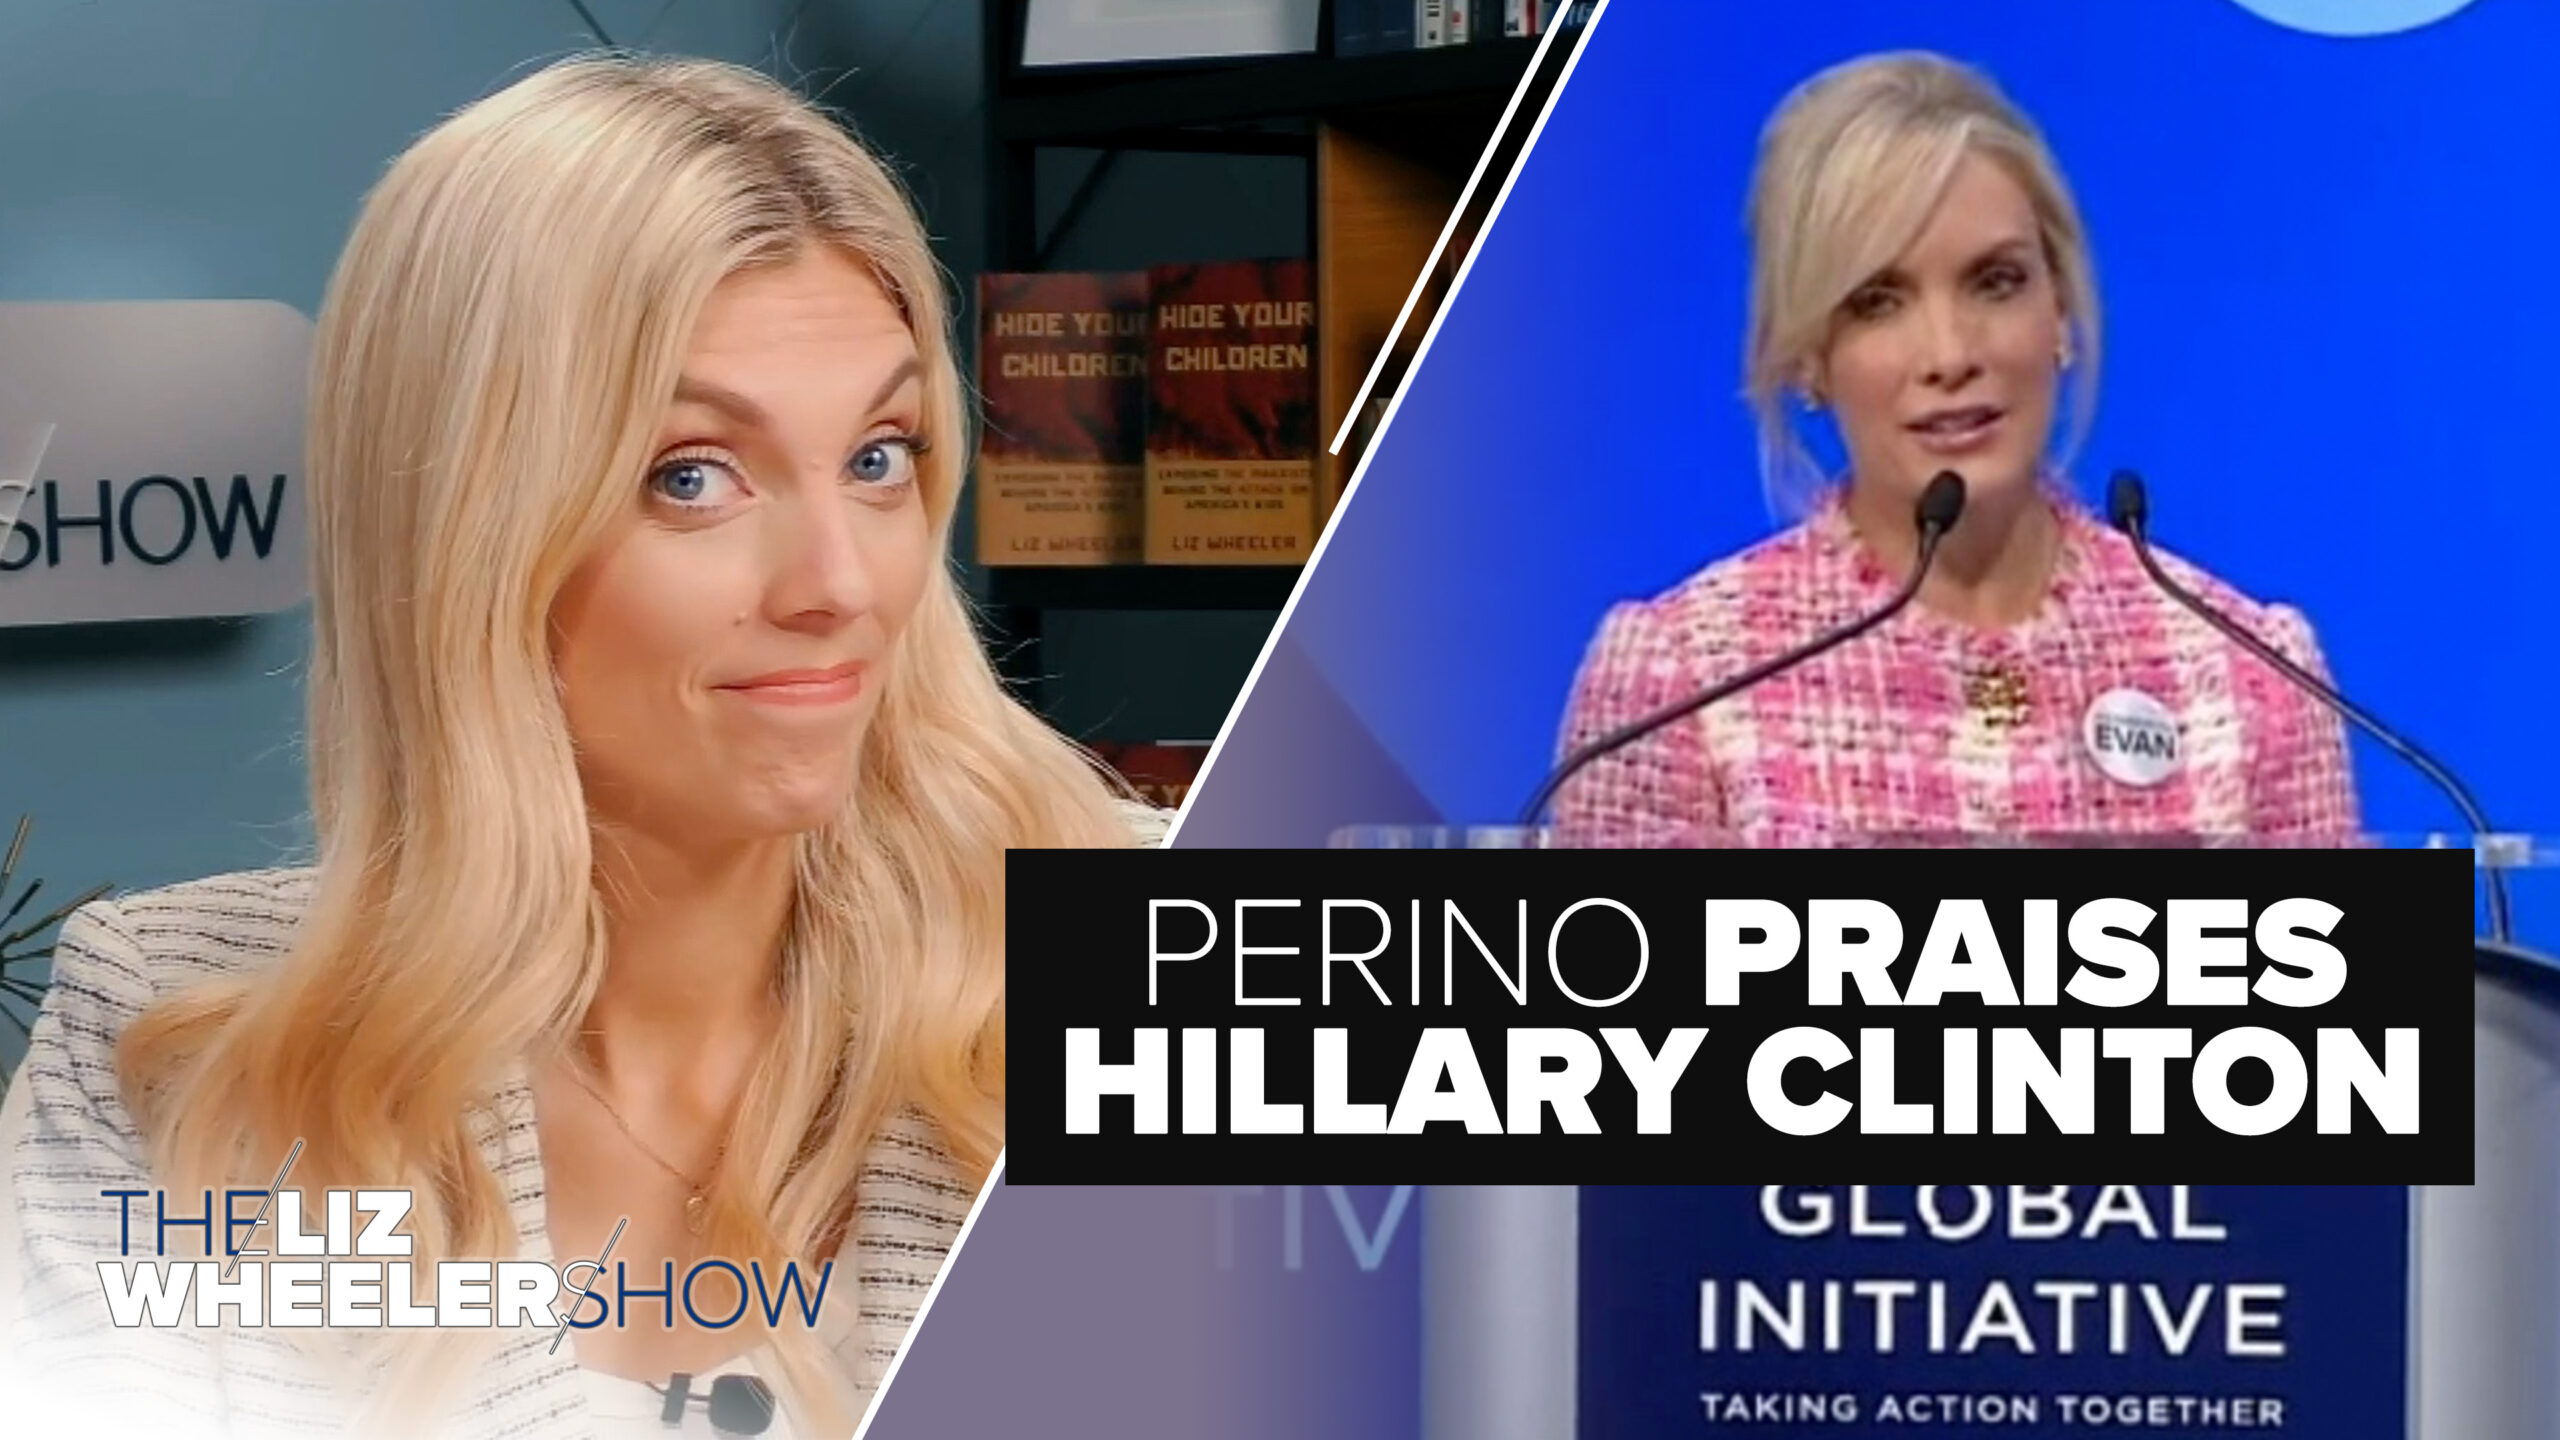 Fox News host Dana Perino appears at a Hillary Clinton event